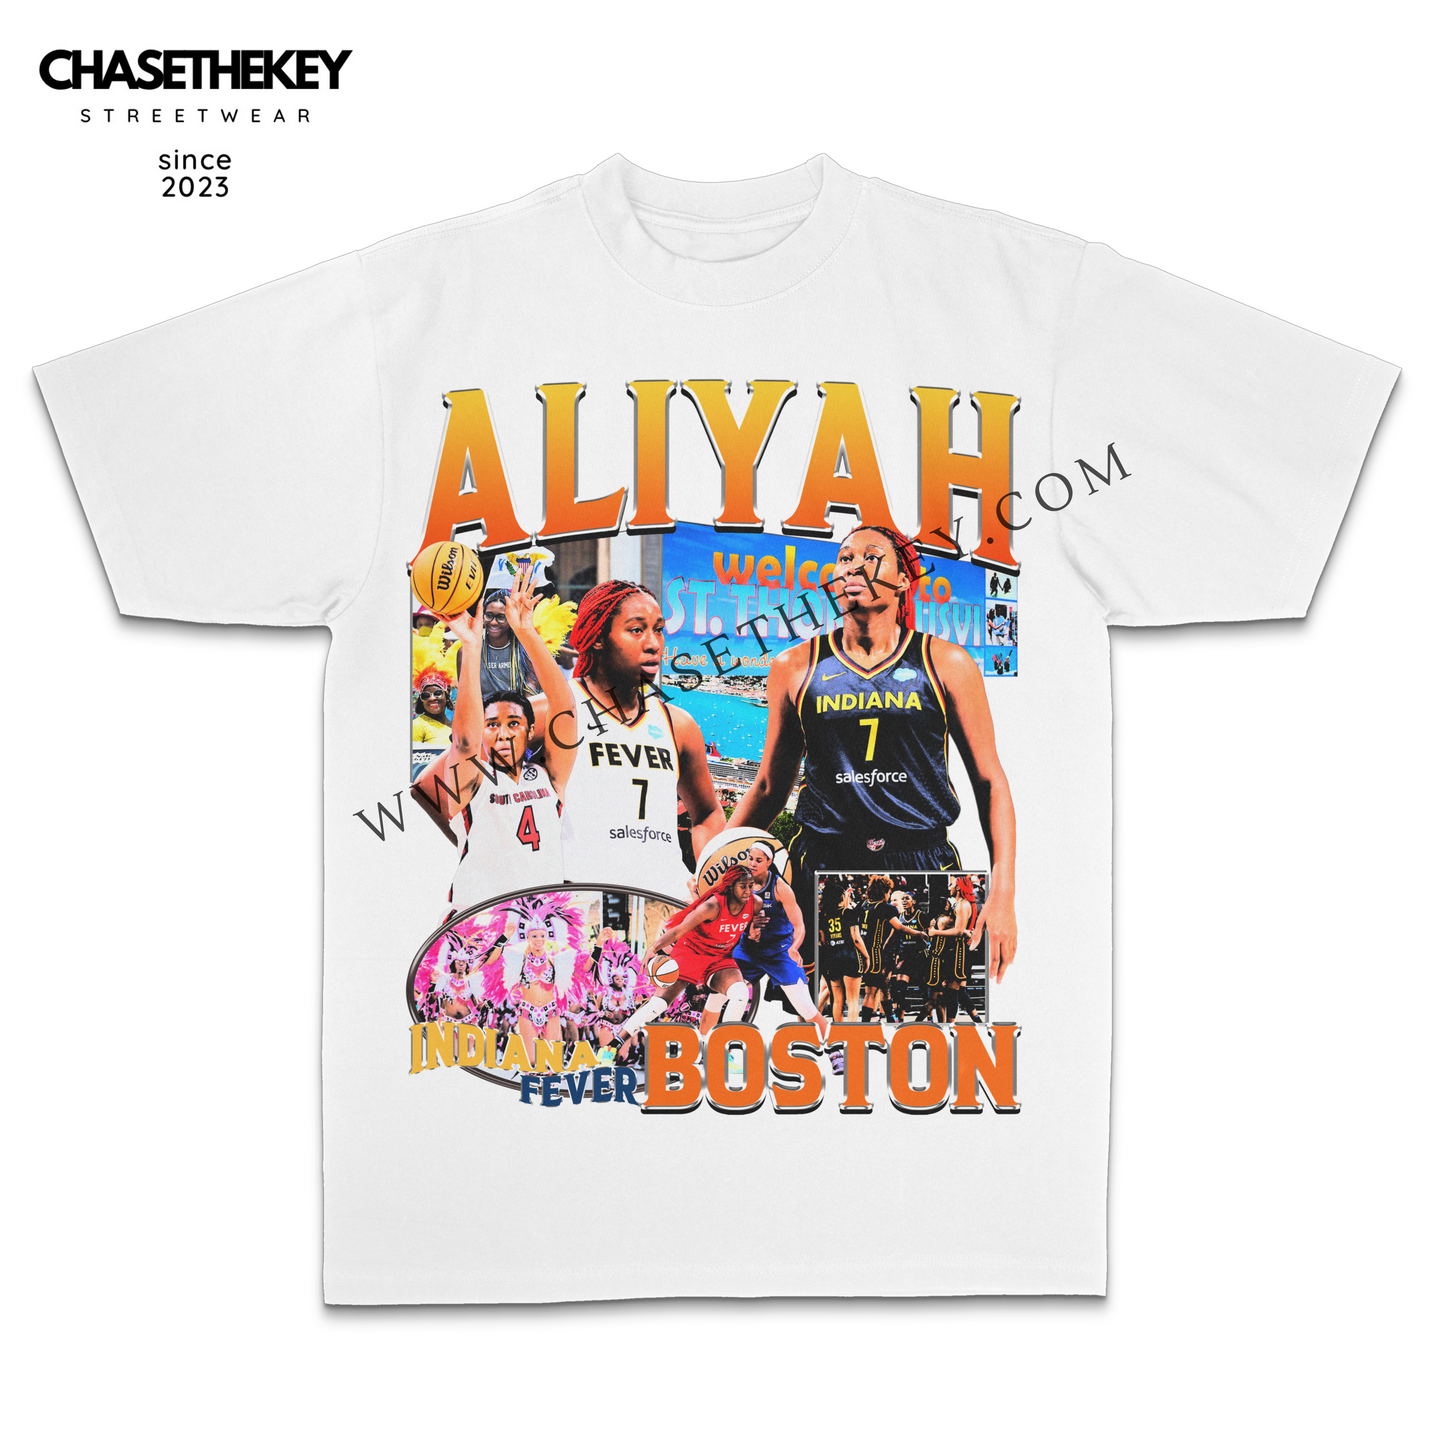 Aliyah Boston Fever Shirt